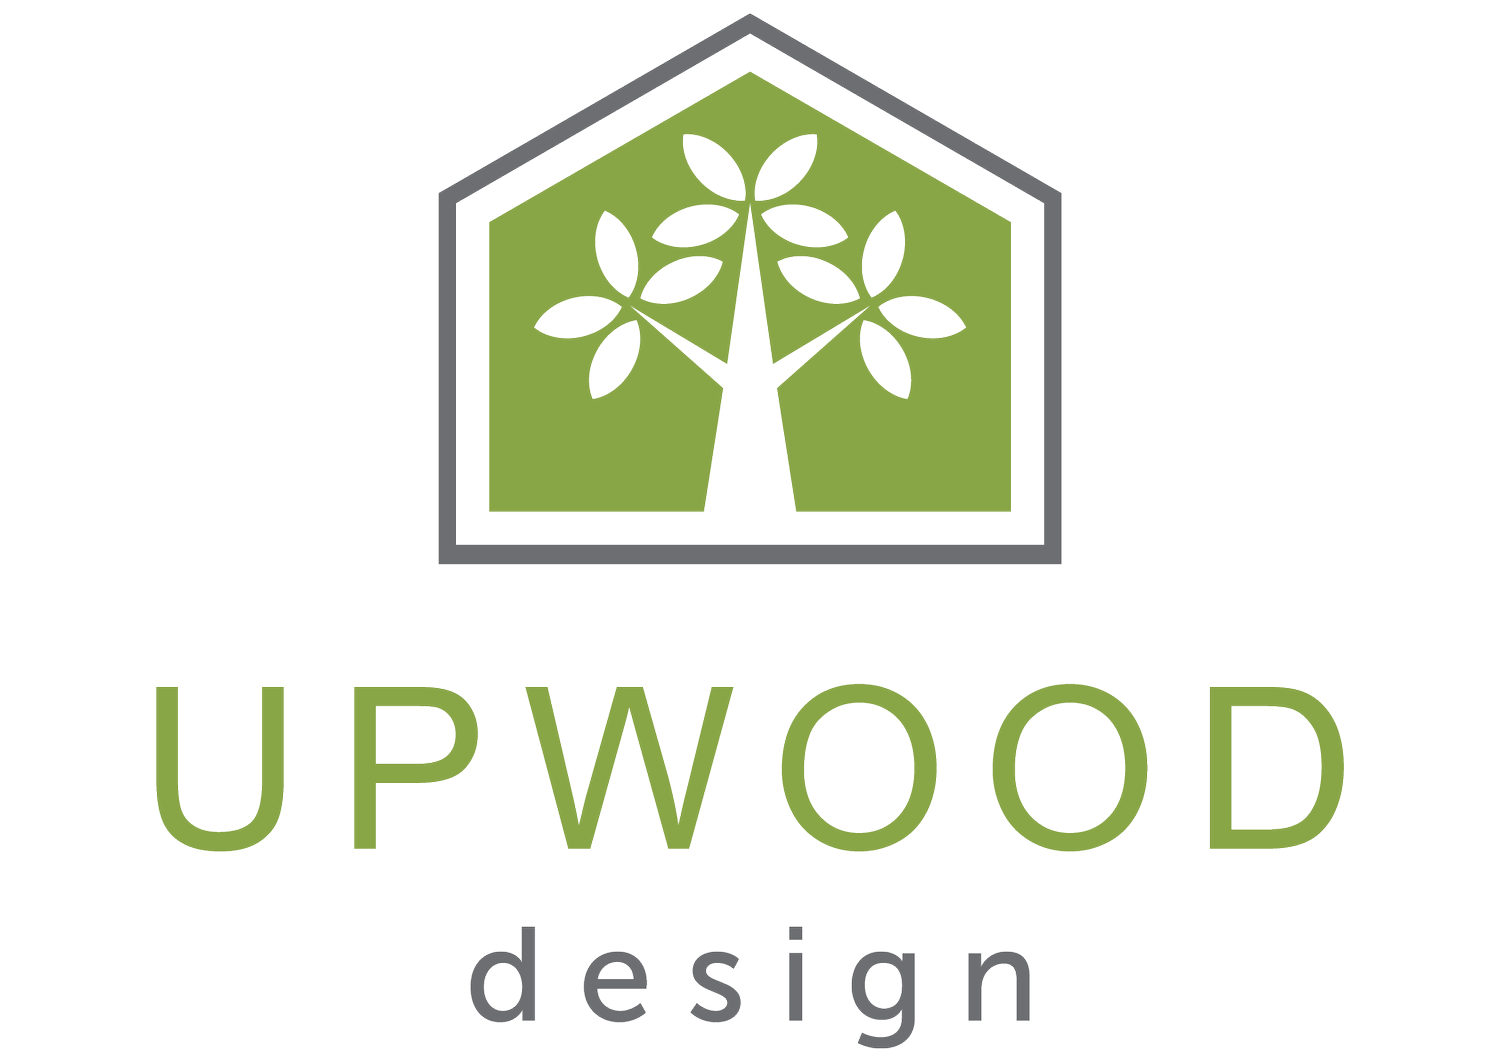 Upwood design